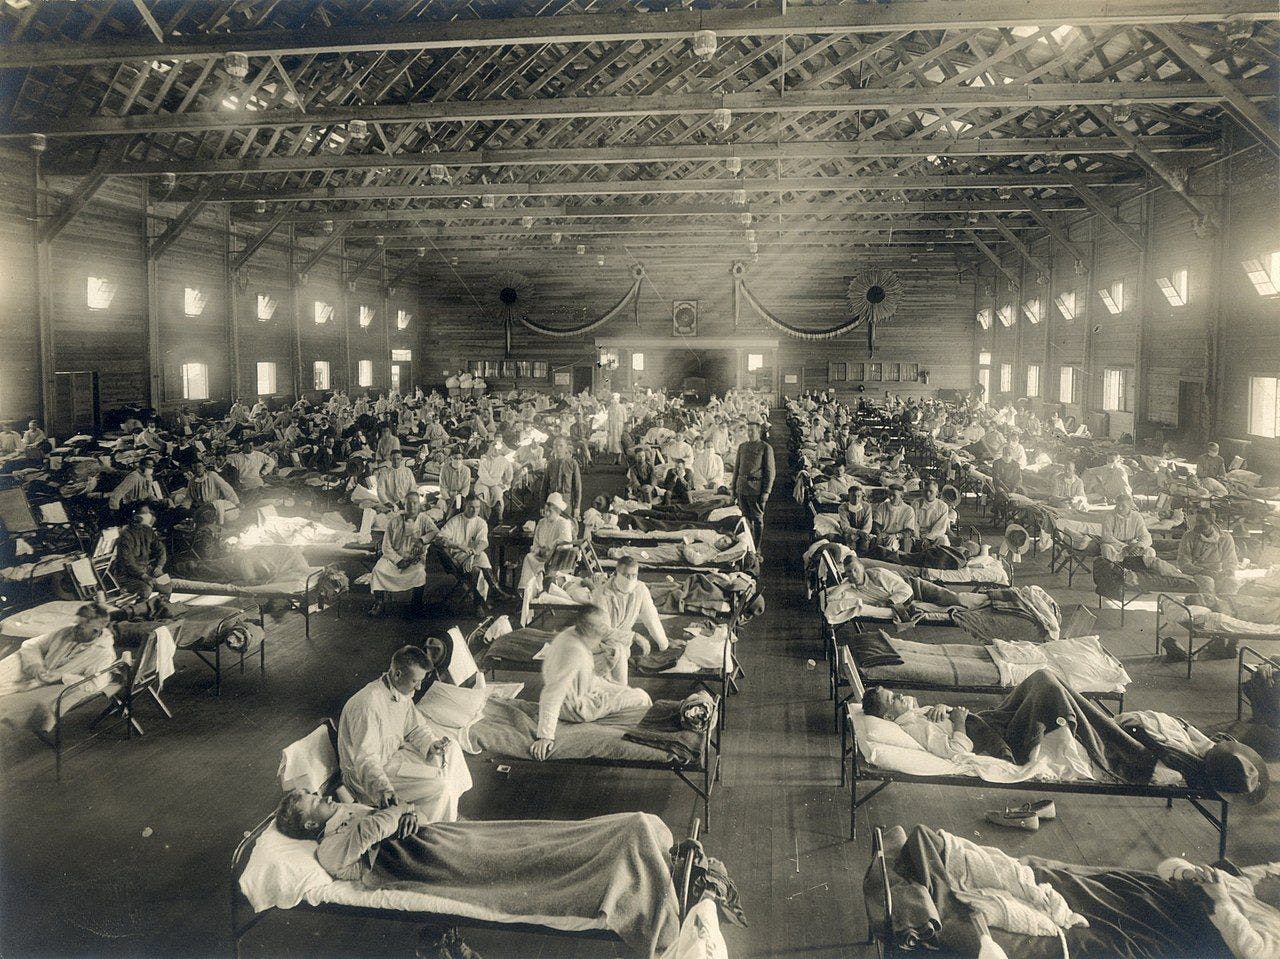 Camp Funston, at Fort Riley, Kansas, during the 1918 Spanish flu pandemic